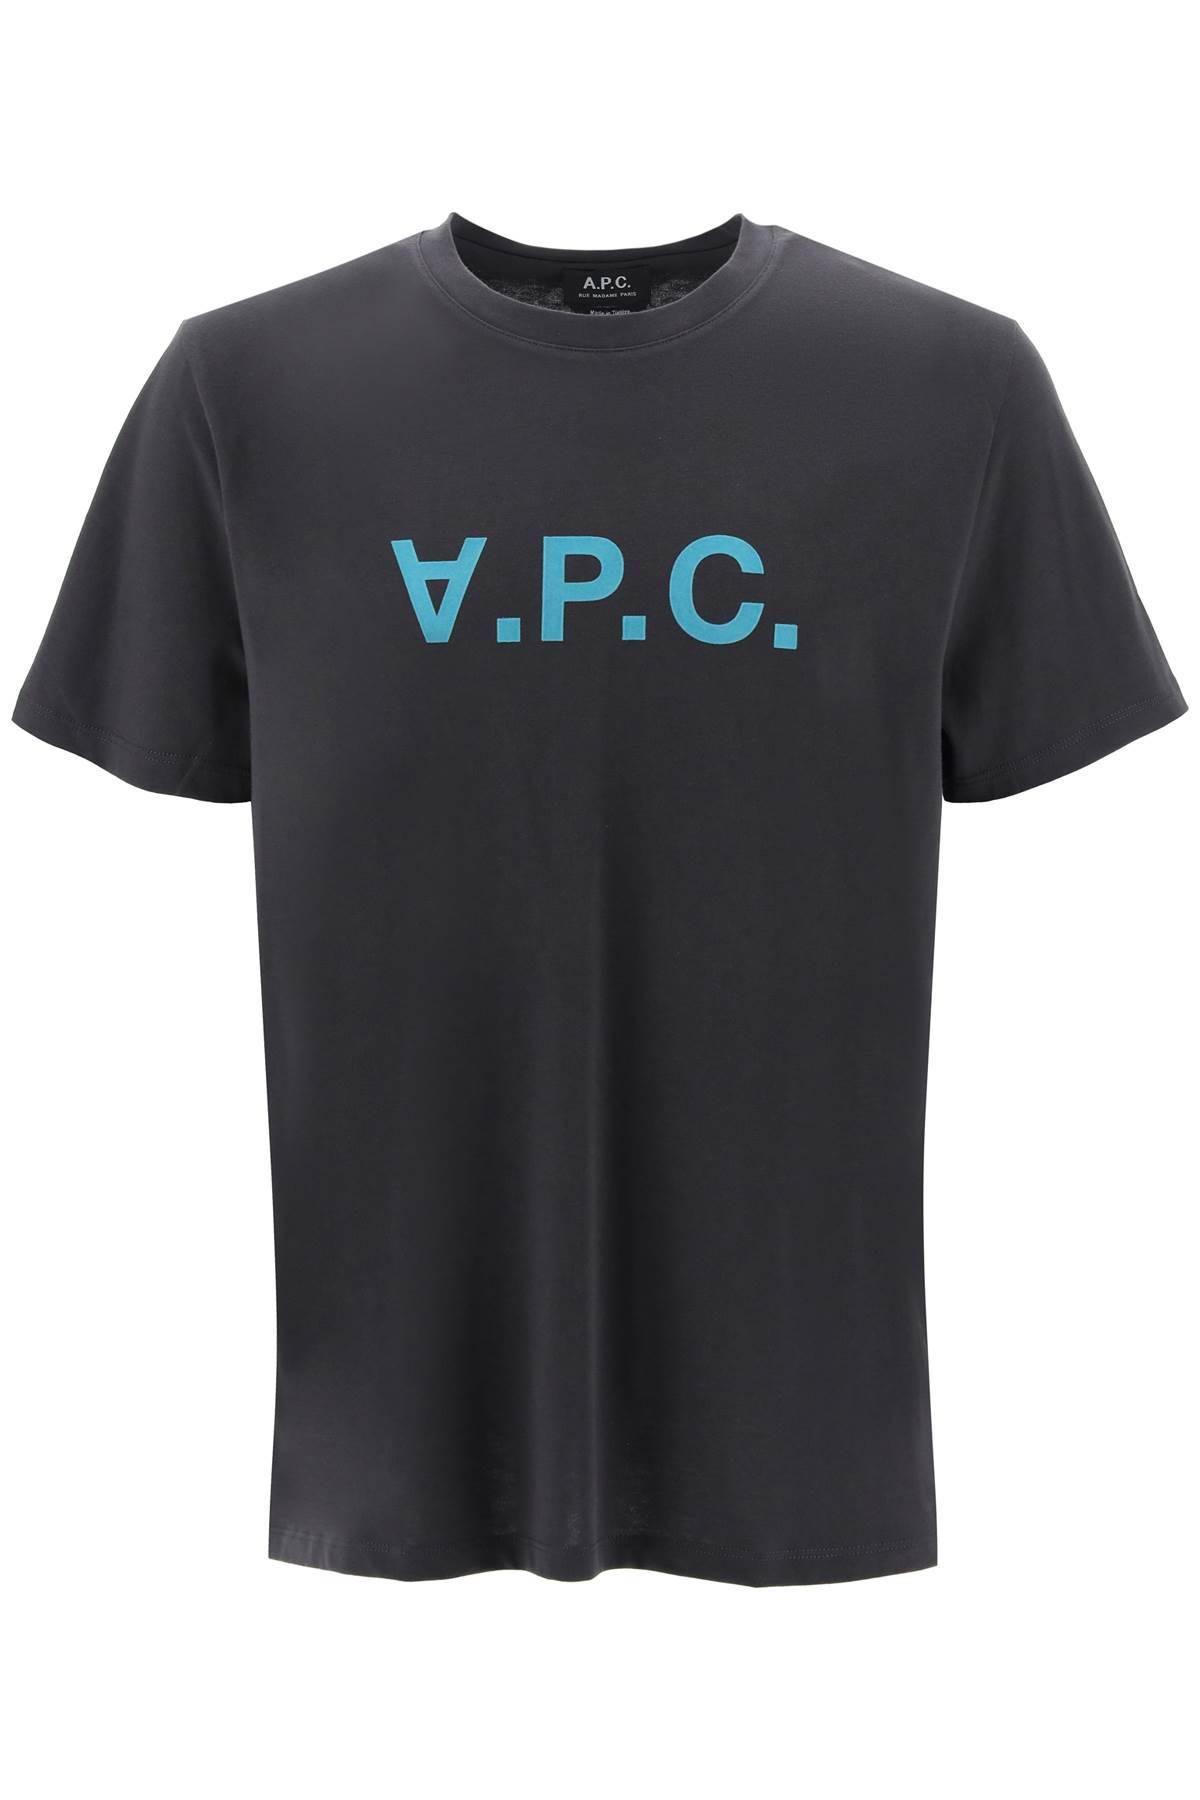 A.P.C. A. P.C. flocked vpc logo t-shirt